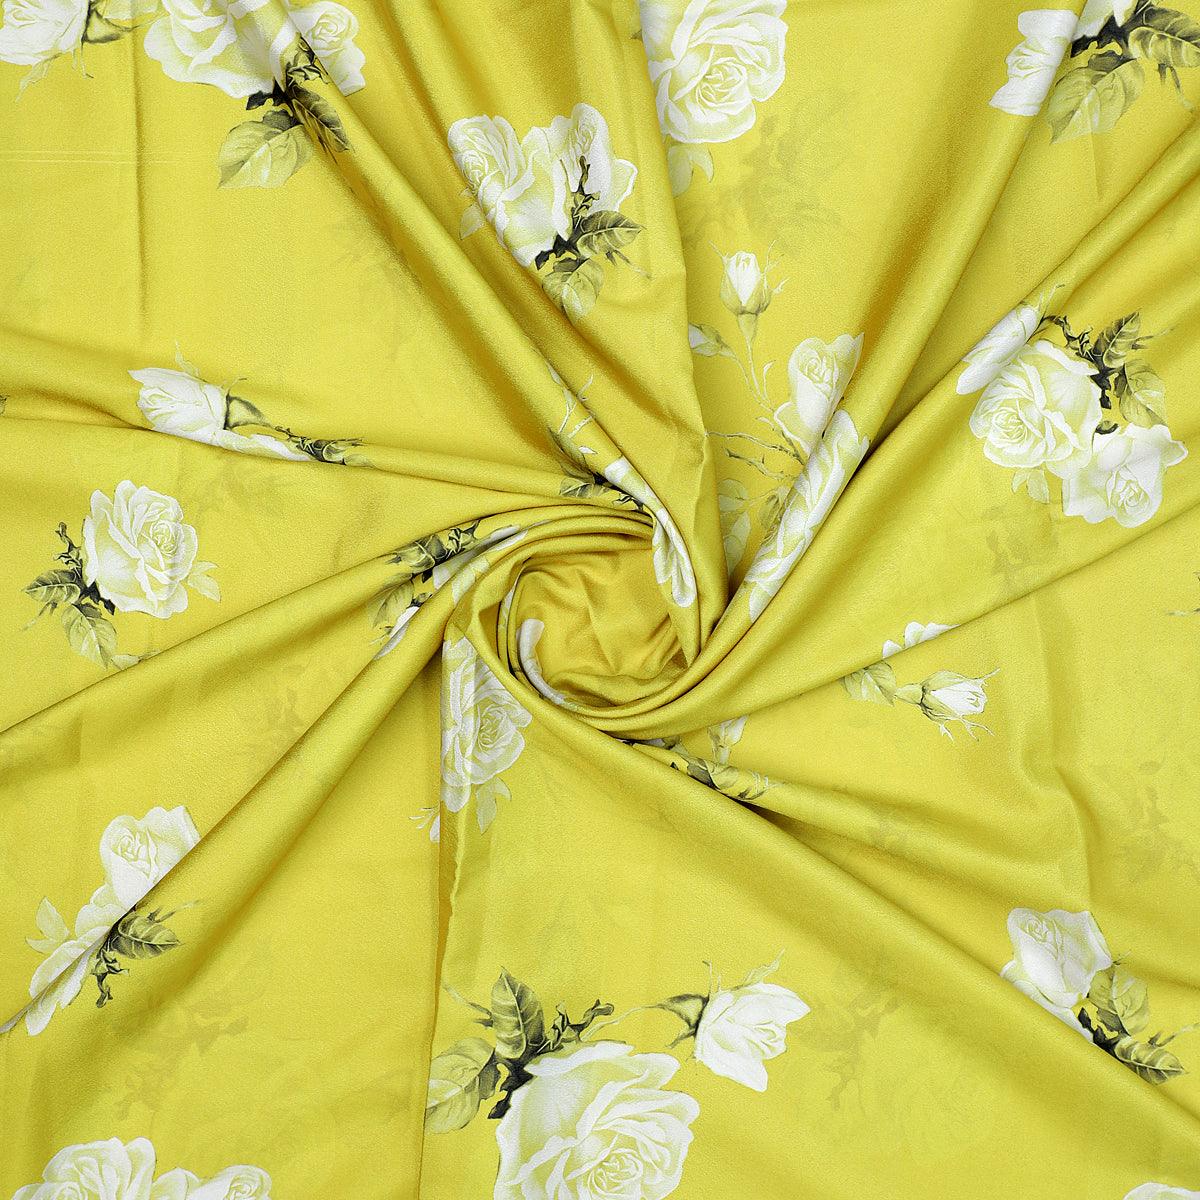 Wrap top, crepe top, - Chiffon prints fabric yellow